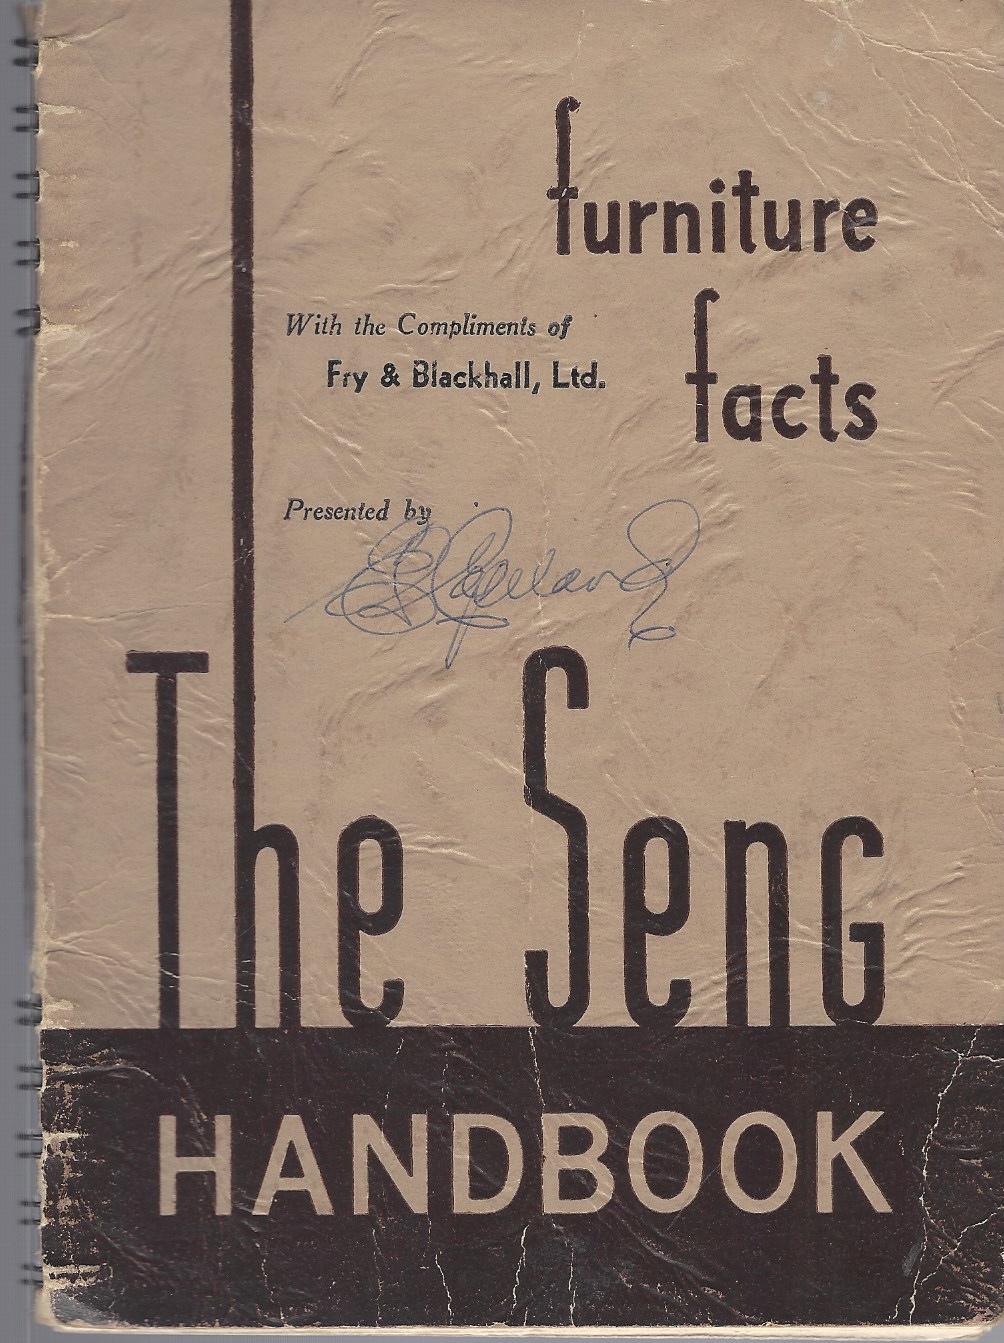 BENTLEY GARTH (EDITOR) - Seng Handbook: Furniture Facts, the